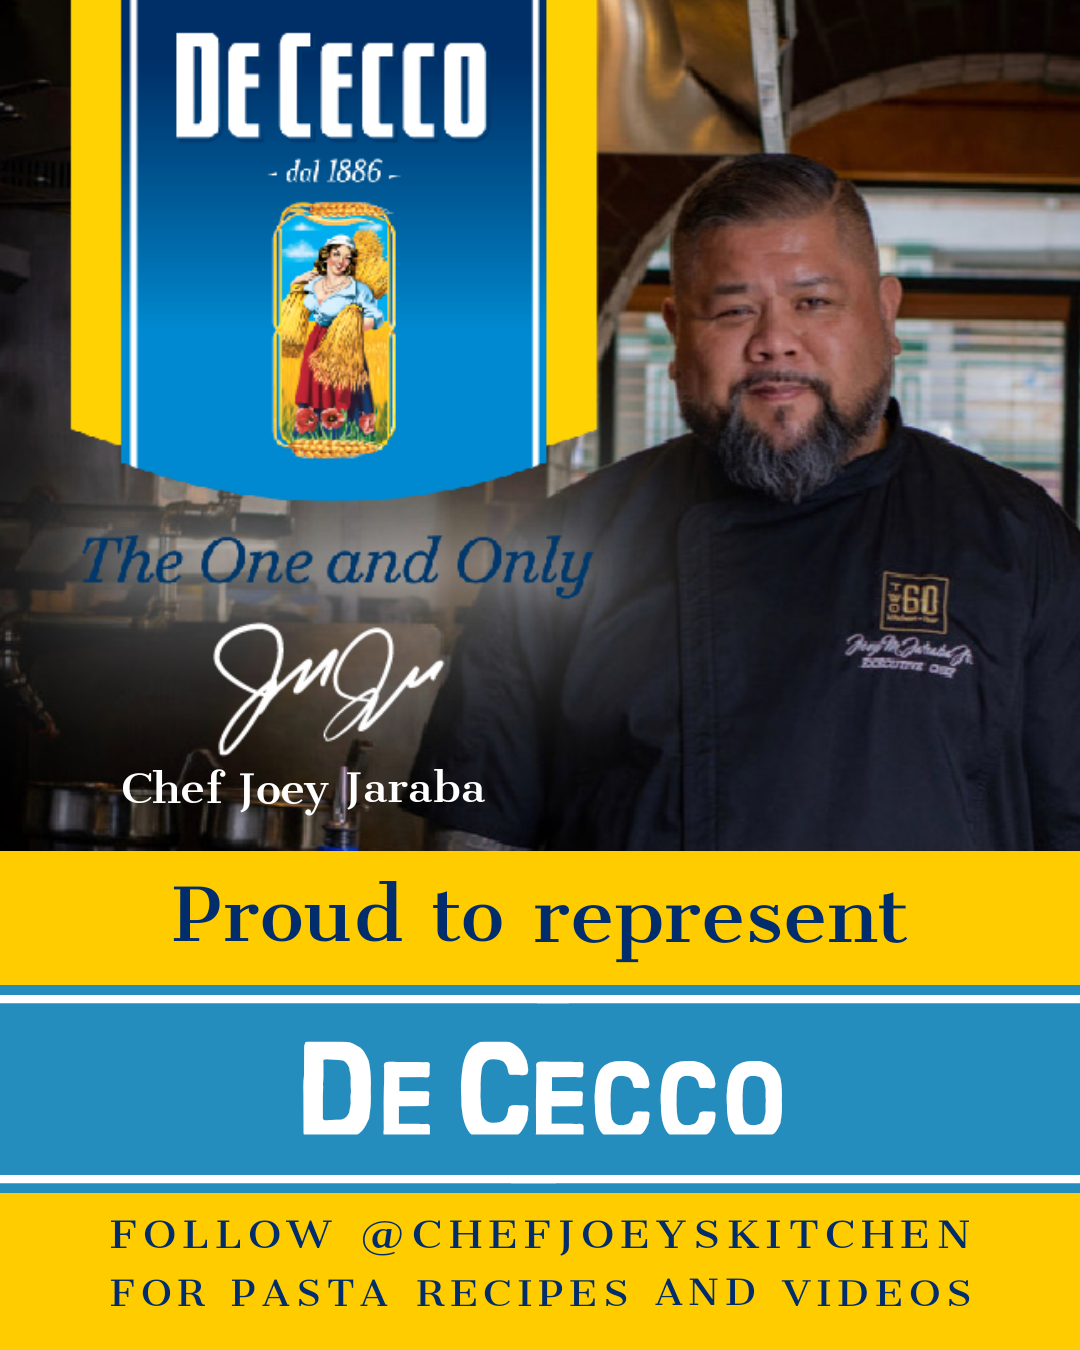 ChefJoey-DeCecco-instagram.png